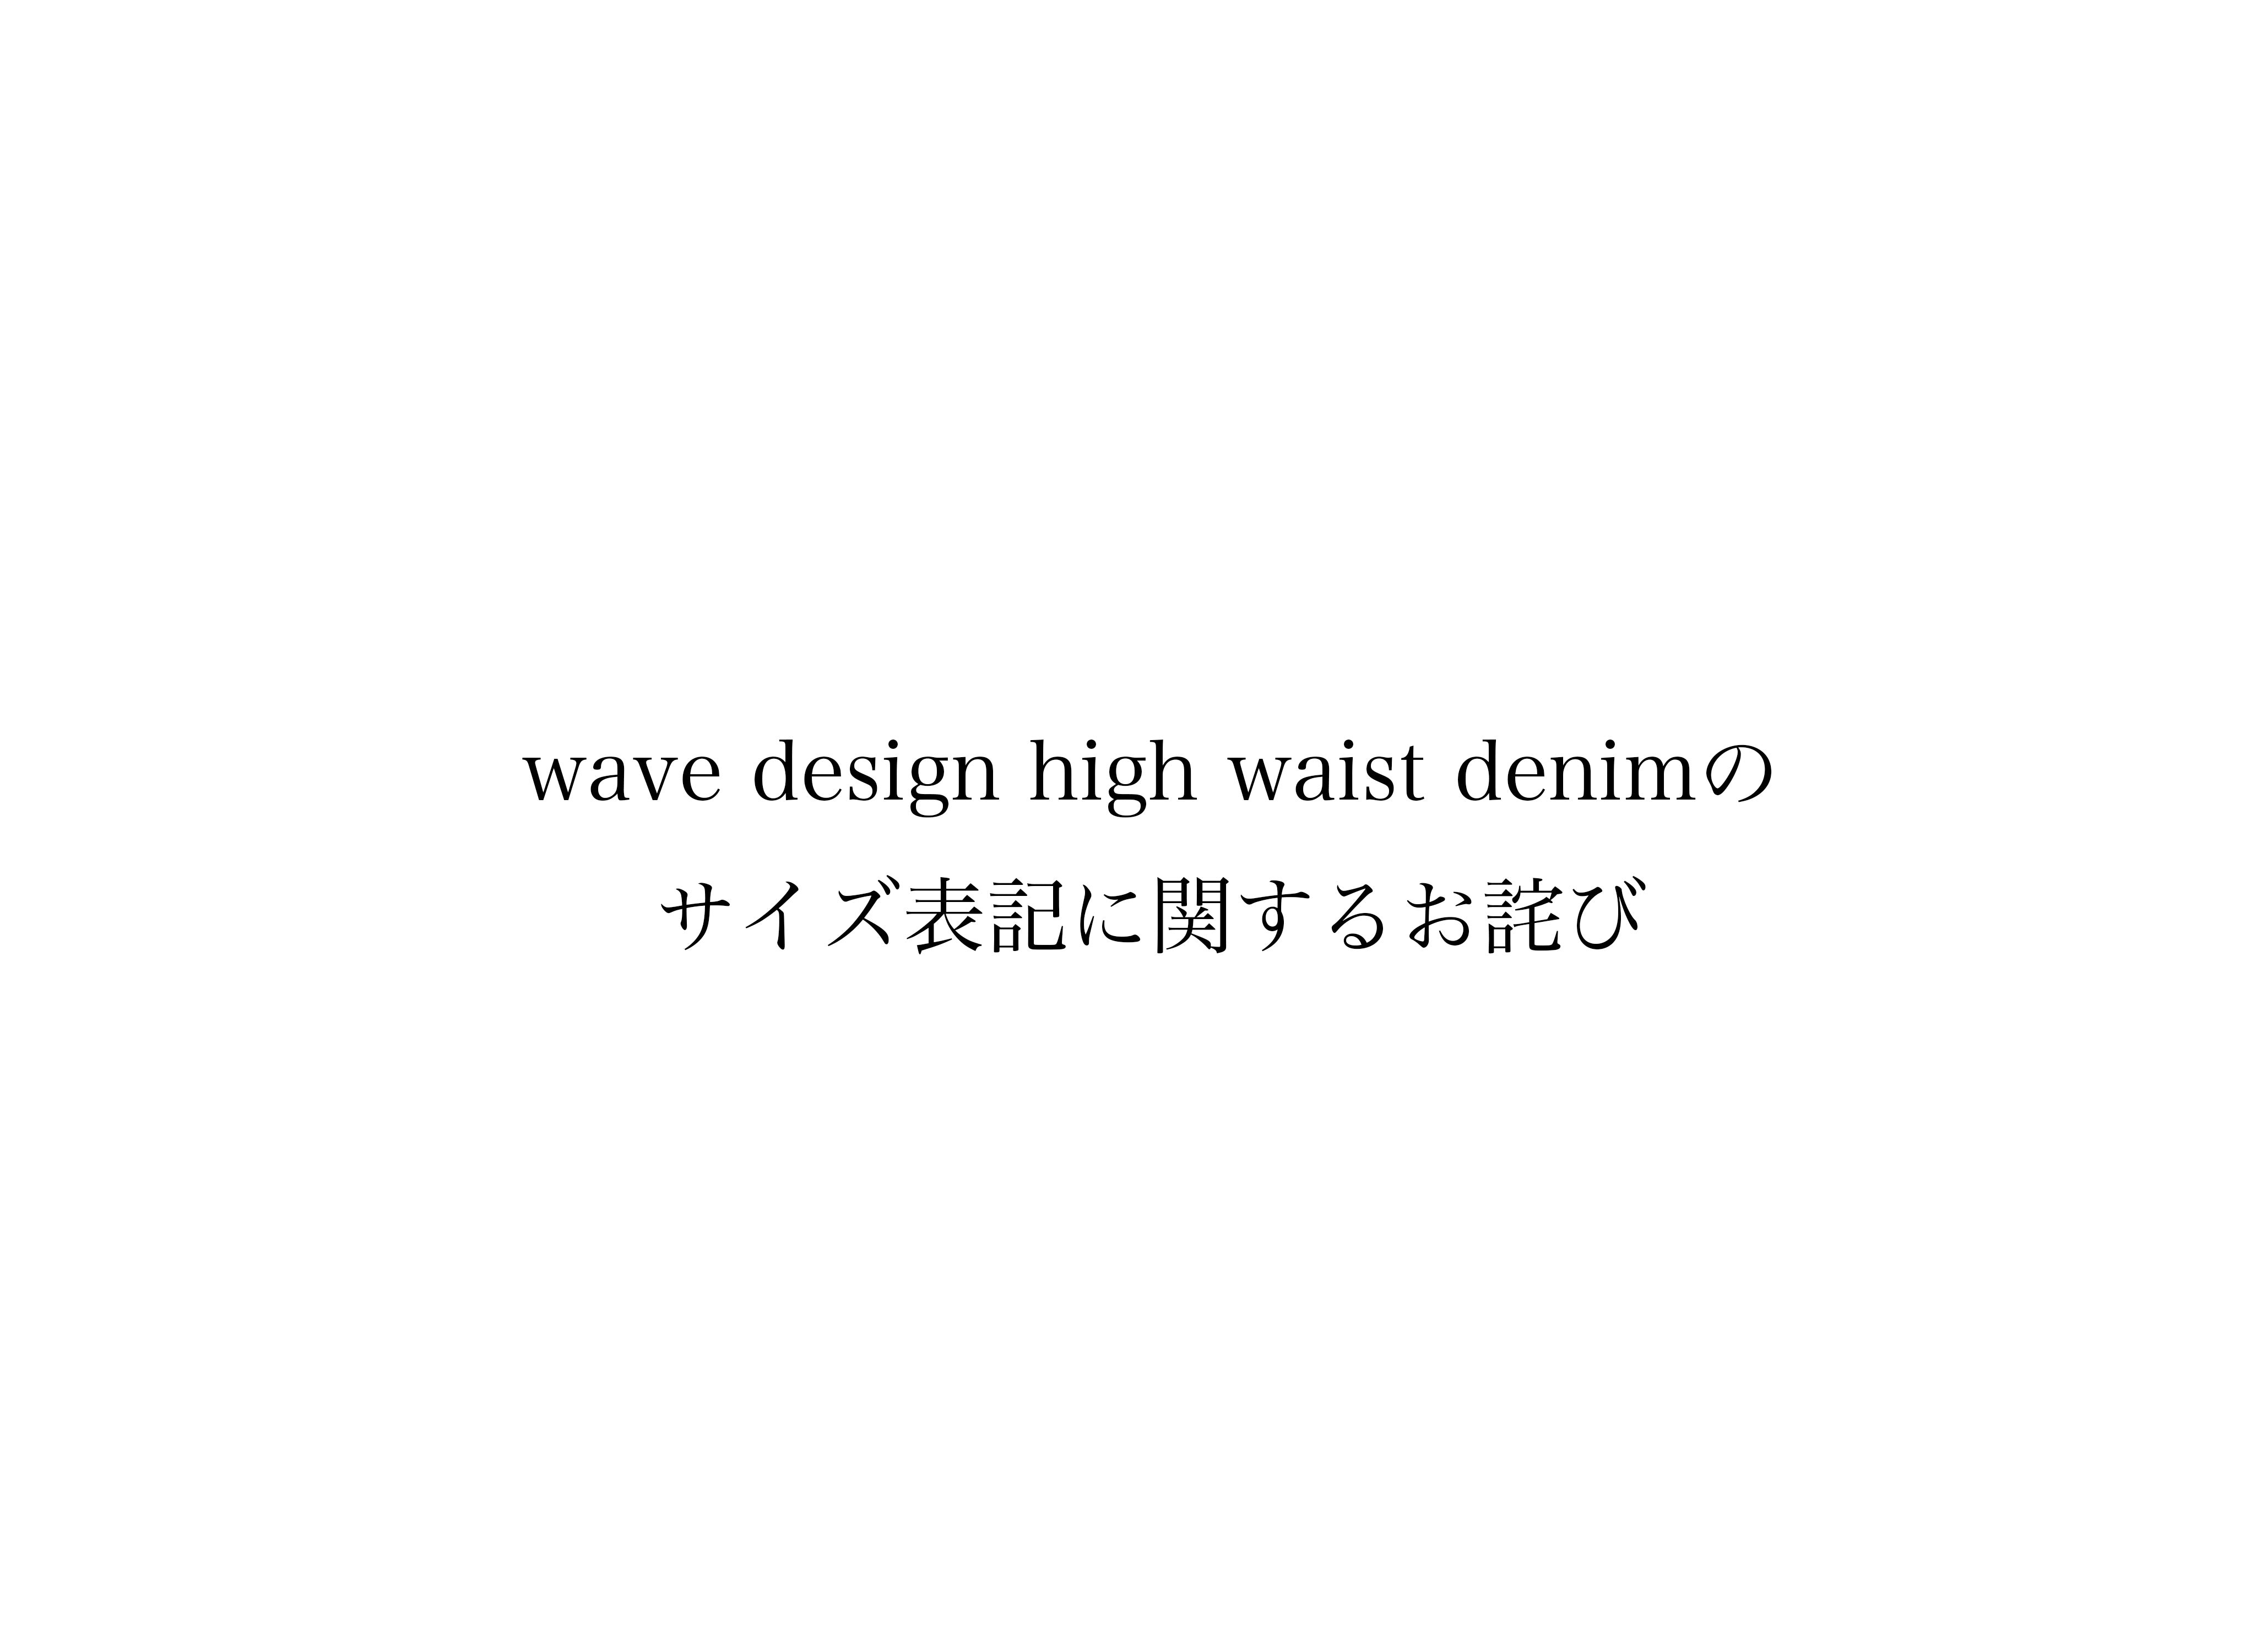 wave design high waist denimのサイズ表記に関するお詫び – Eaphi